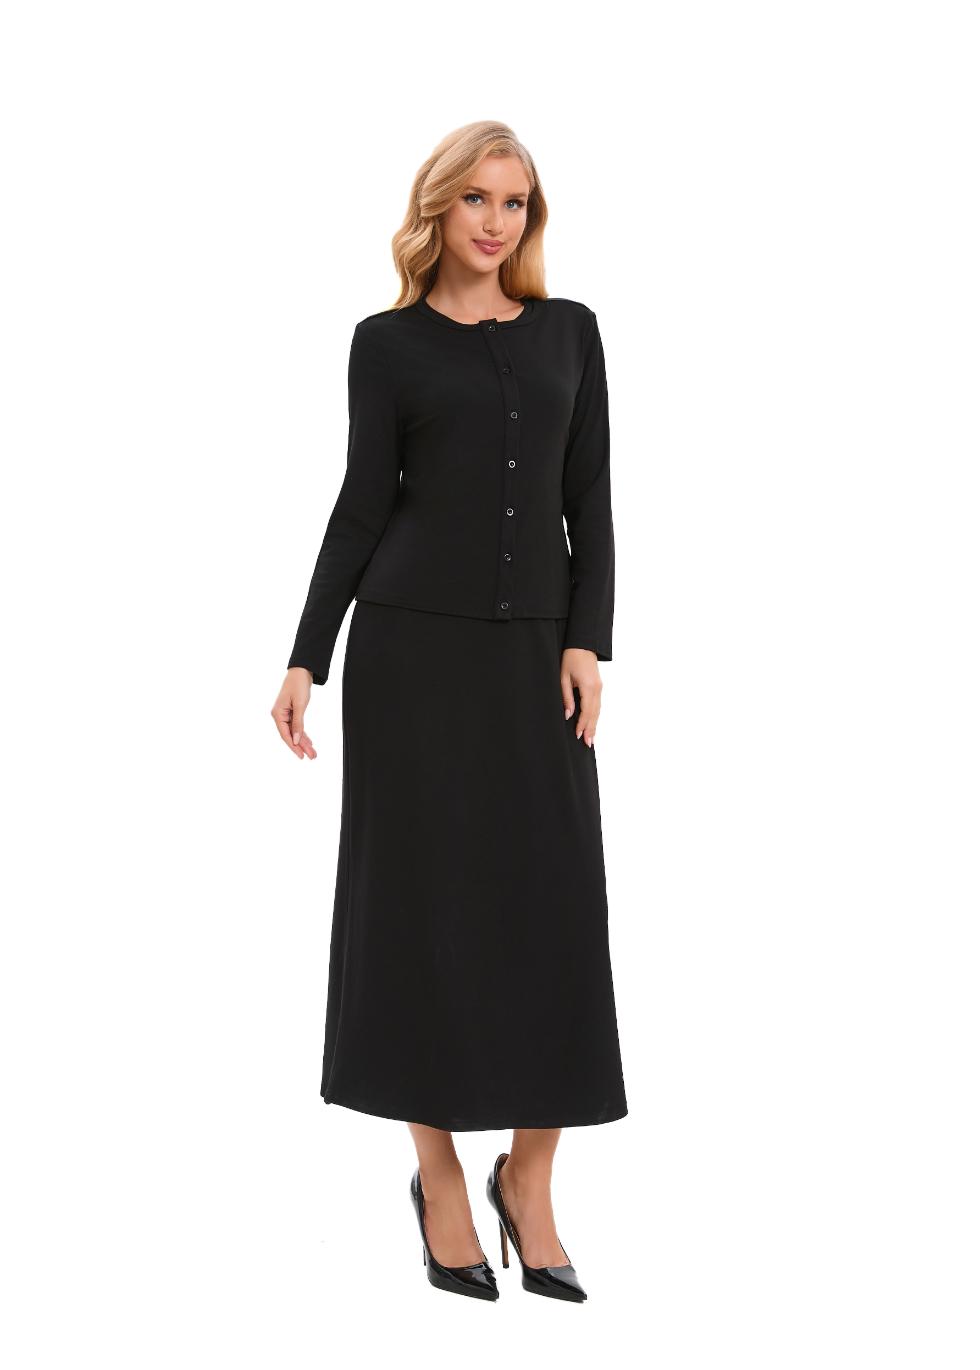 Black Sheath Dress & Cardigan Matching Outfit Set